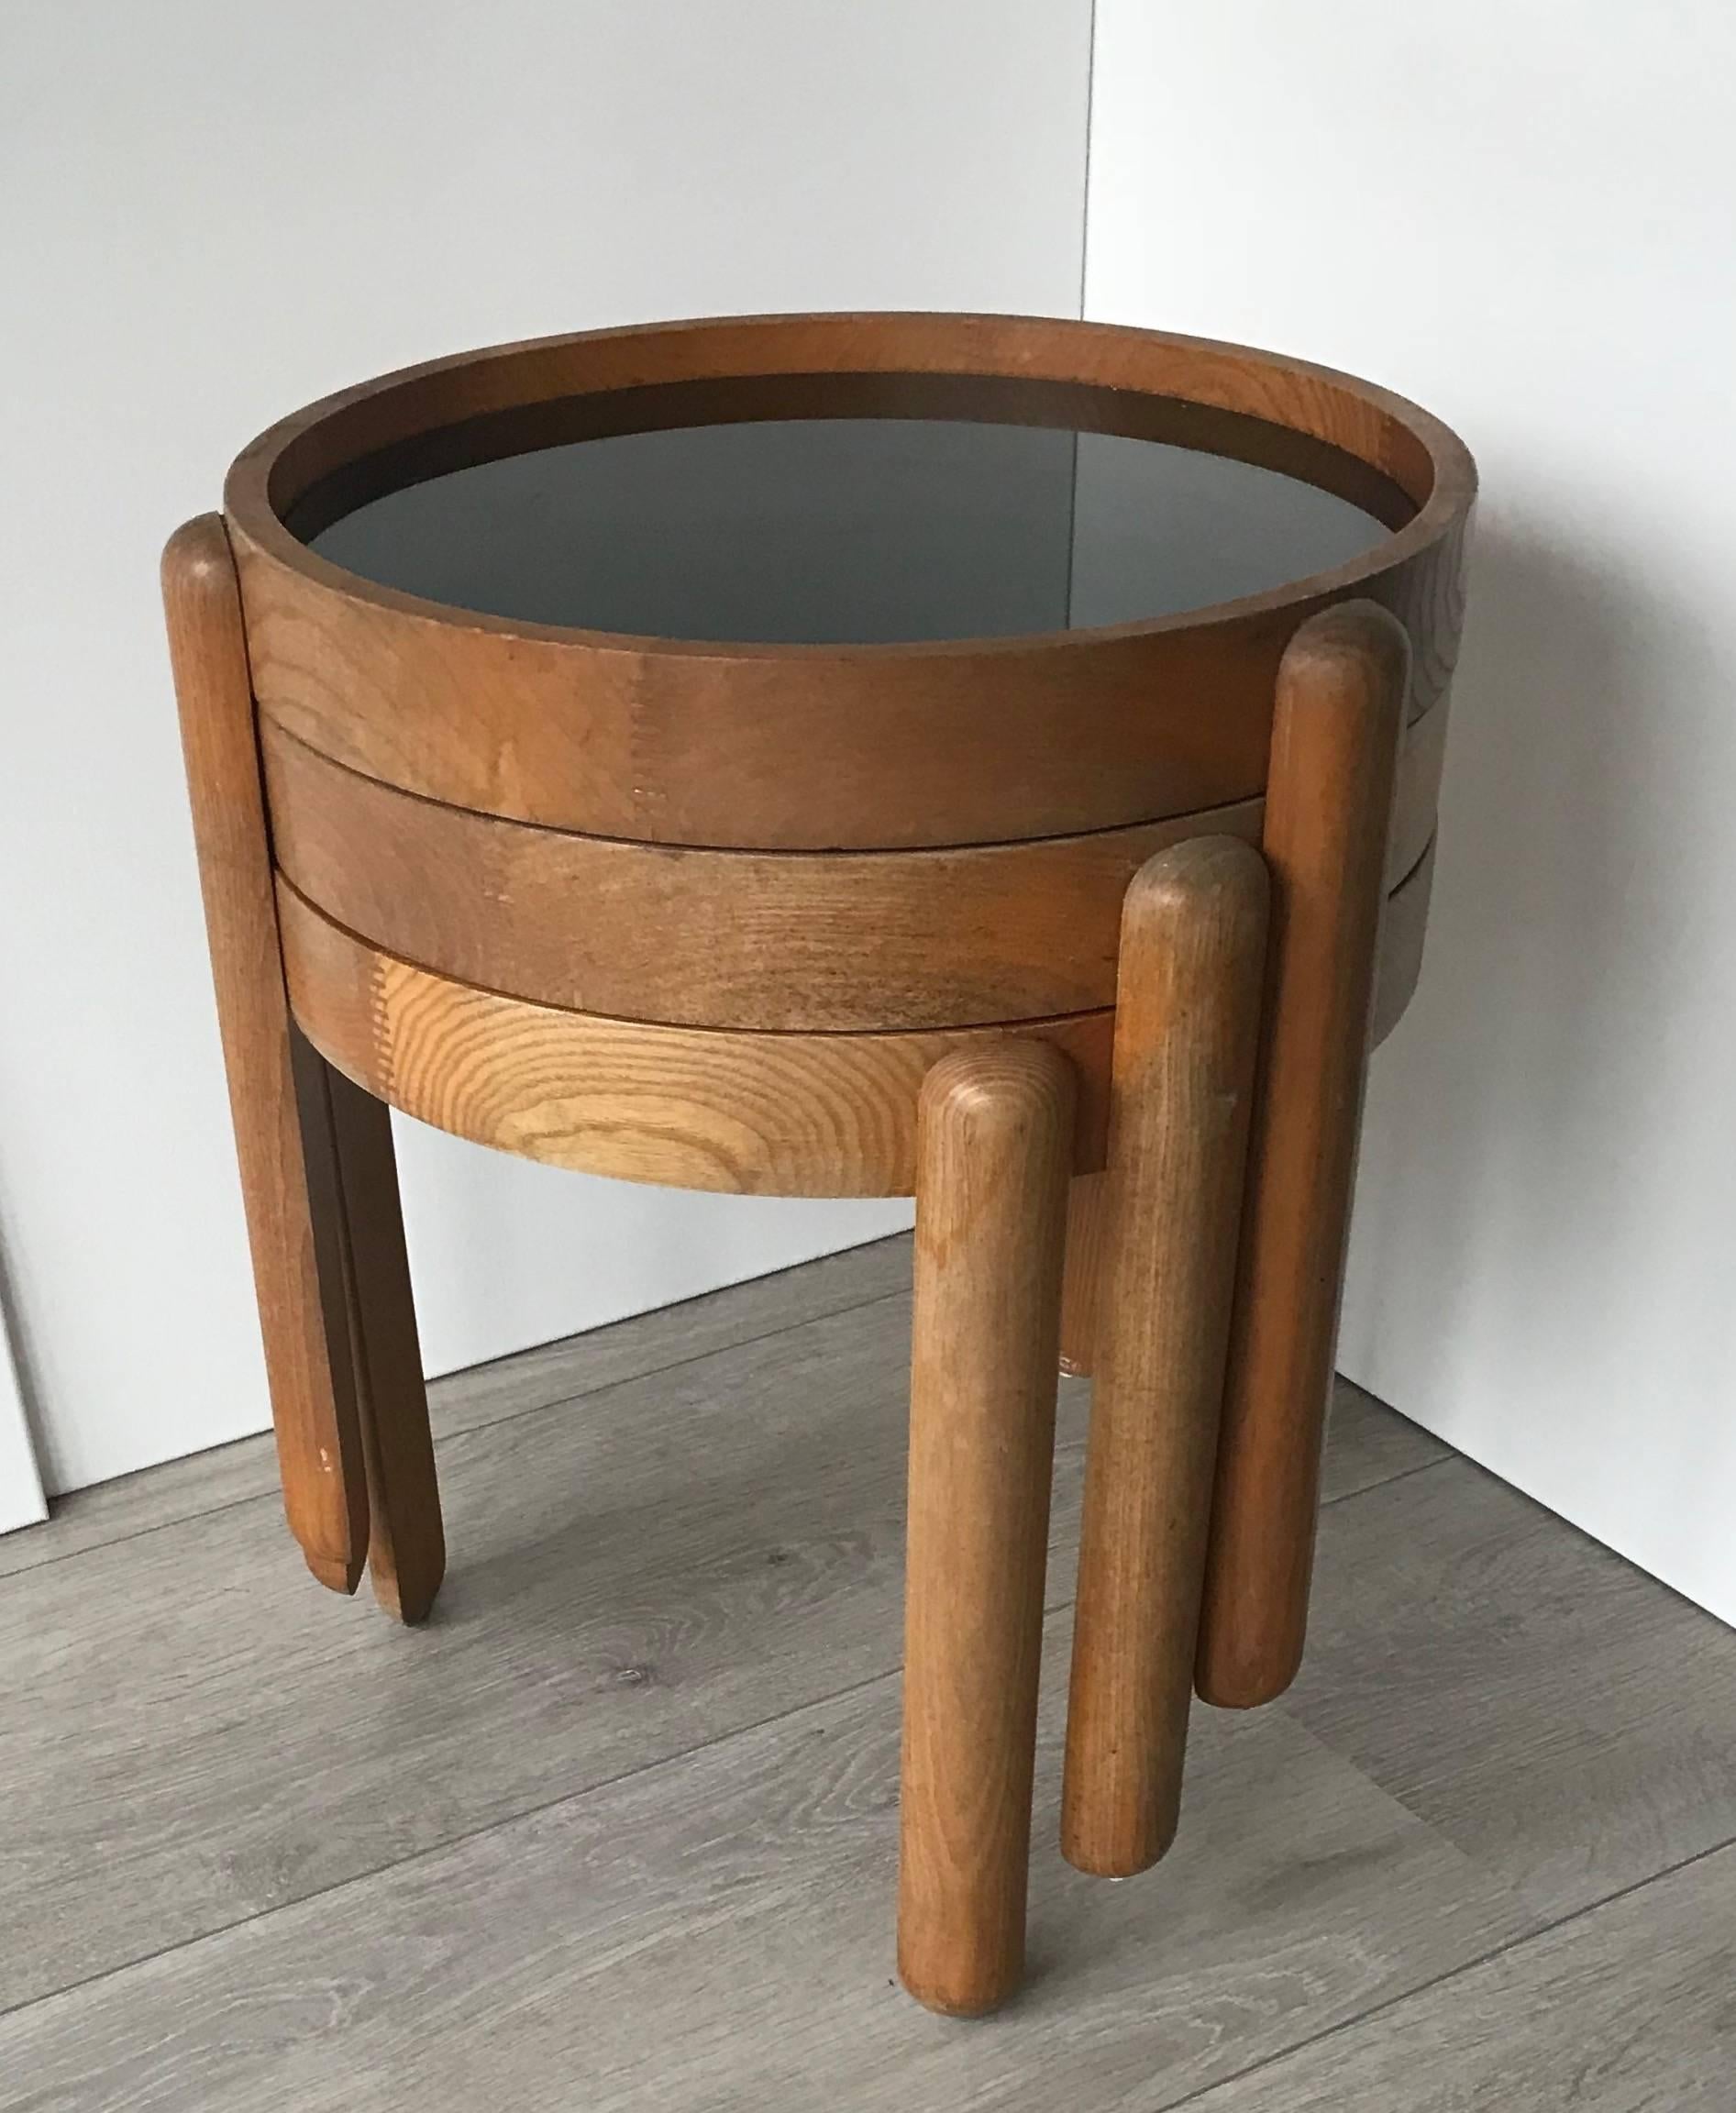 Italian Design Circular Set of Tables by Porada Arredi Cabiate, Wood and Glass 1